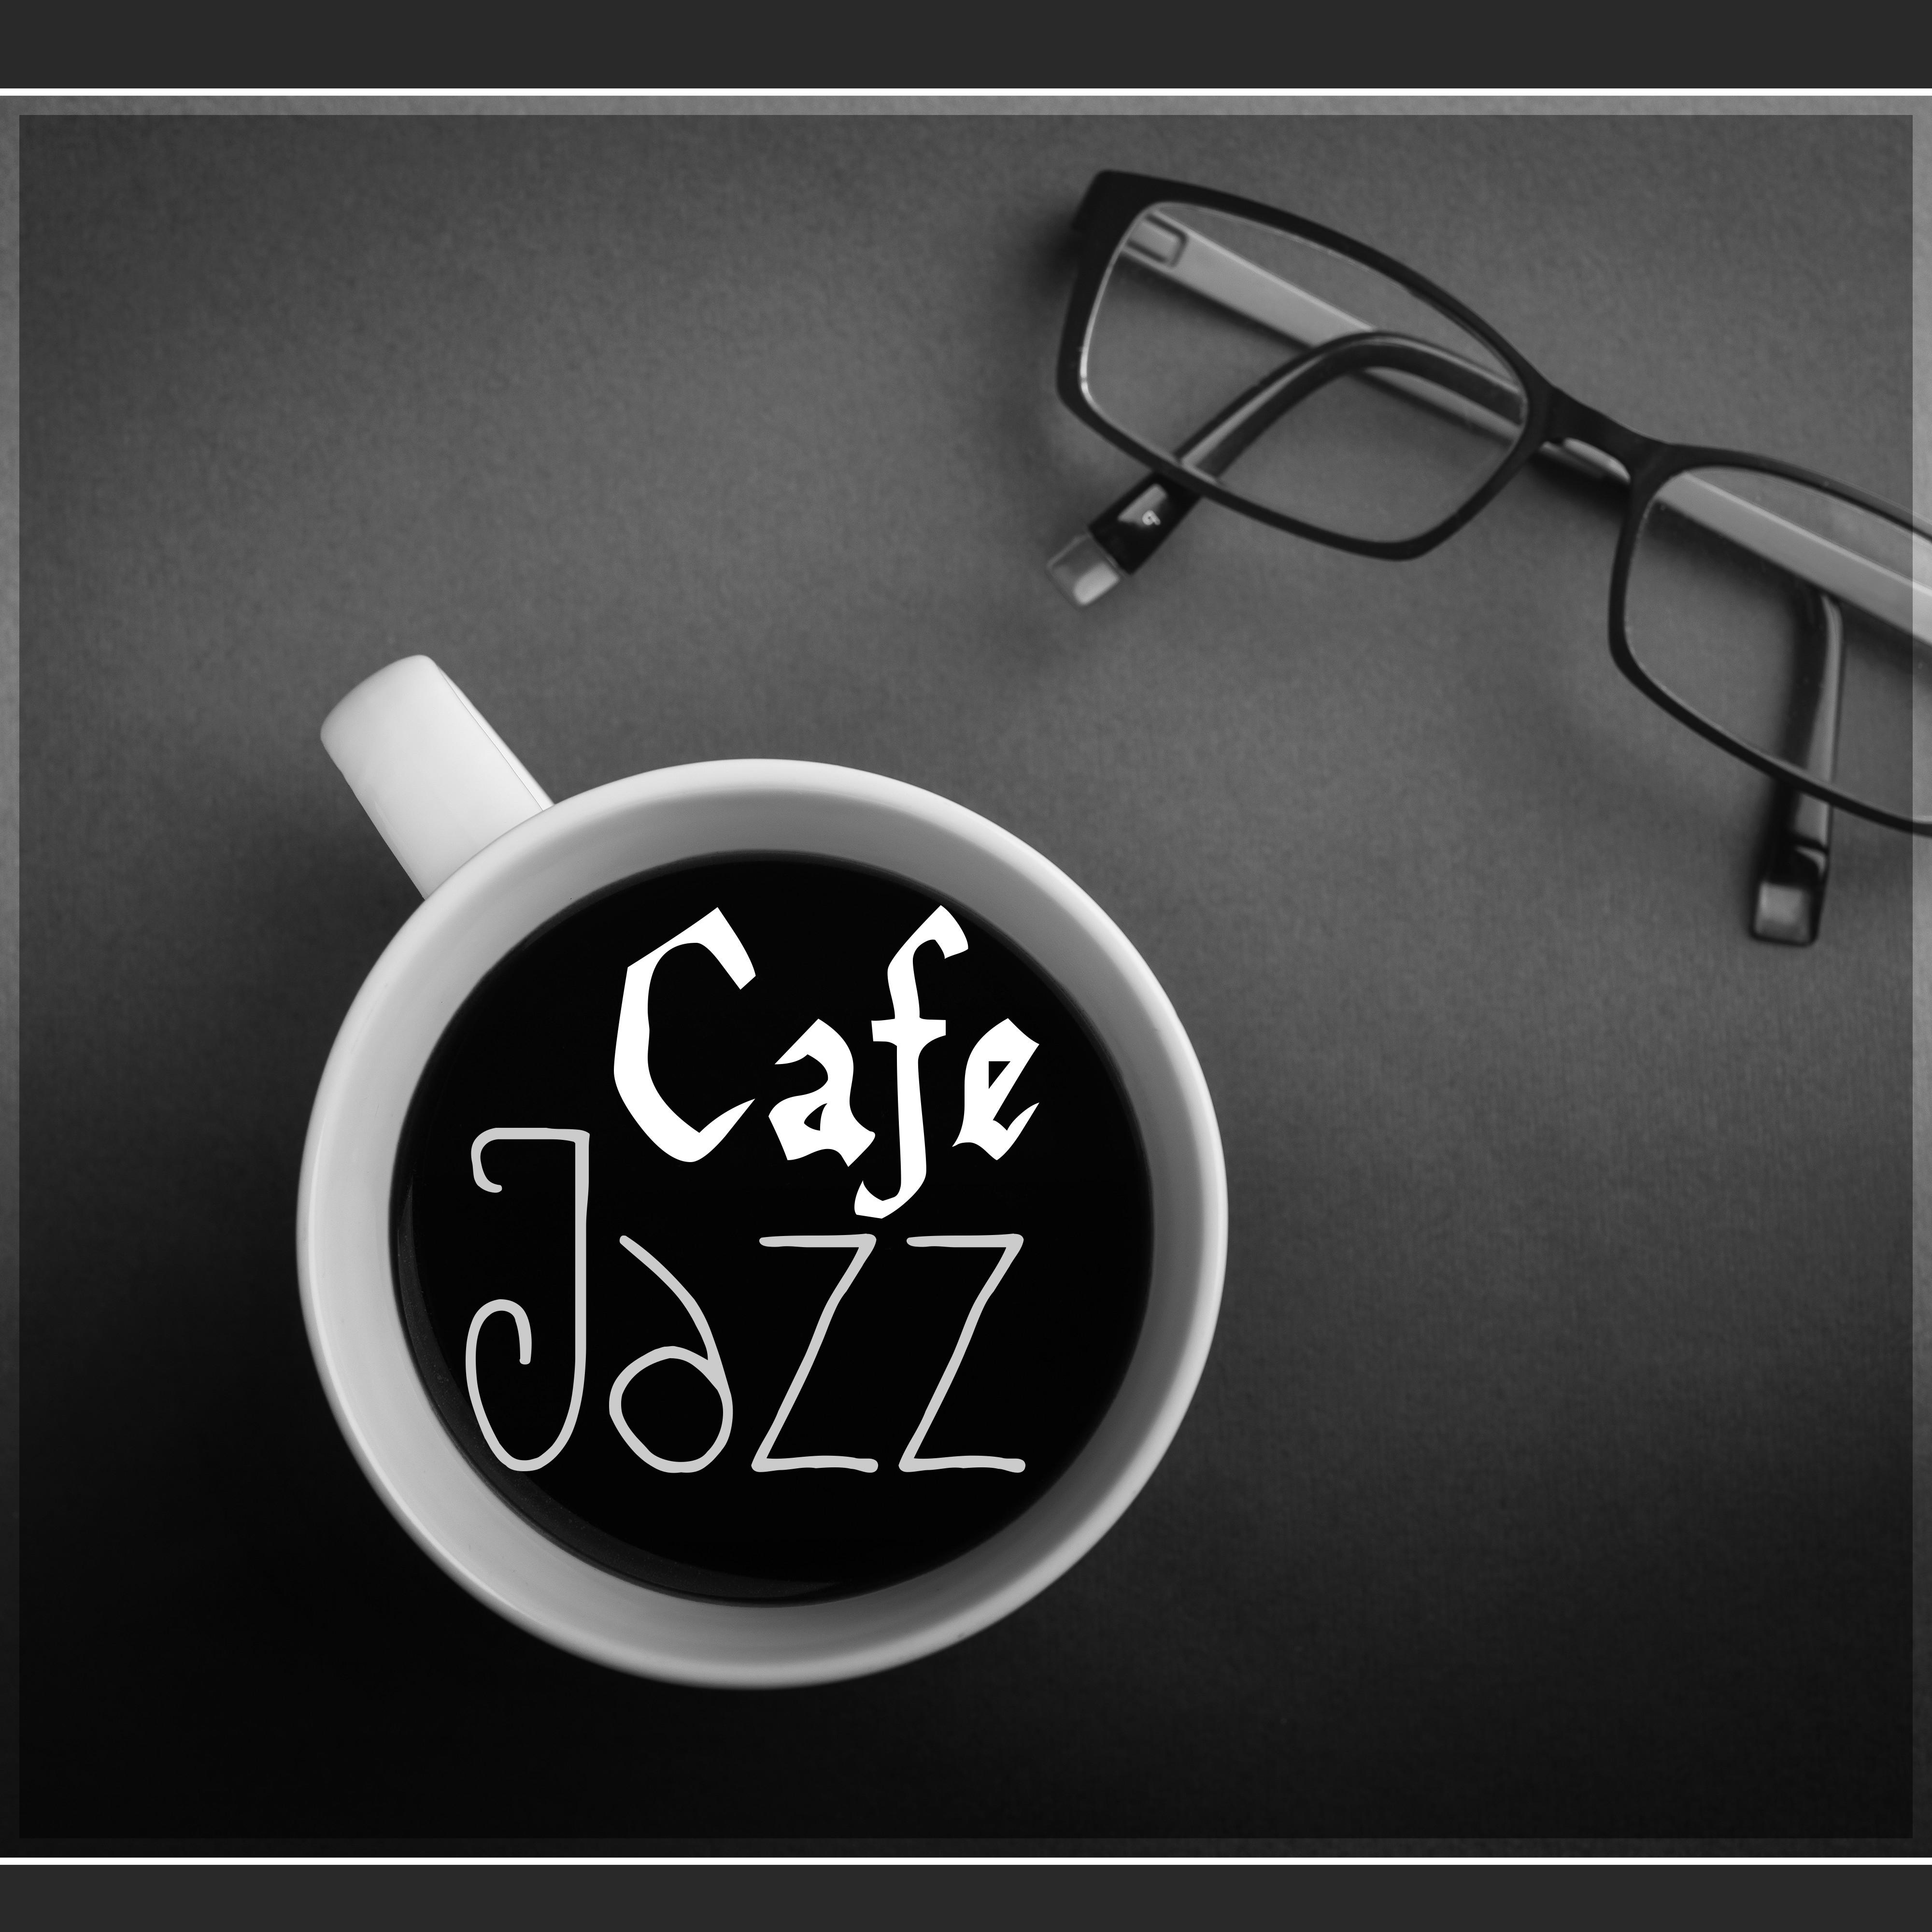 Cafe Jazz - Smooth Music, Piano Jazz, Guitar Songs, Soft Jazz Lounge Music